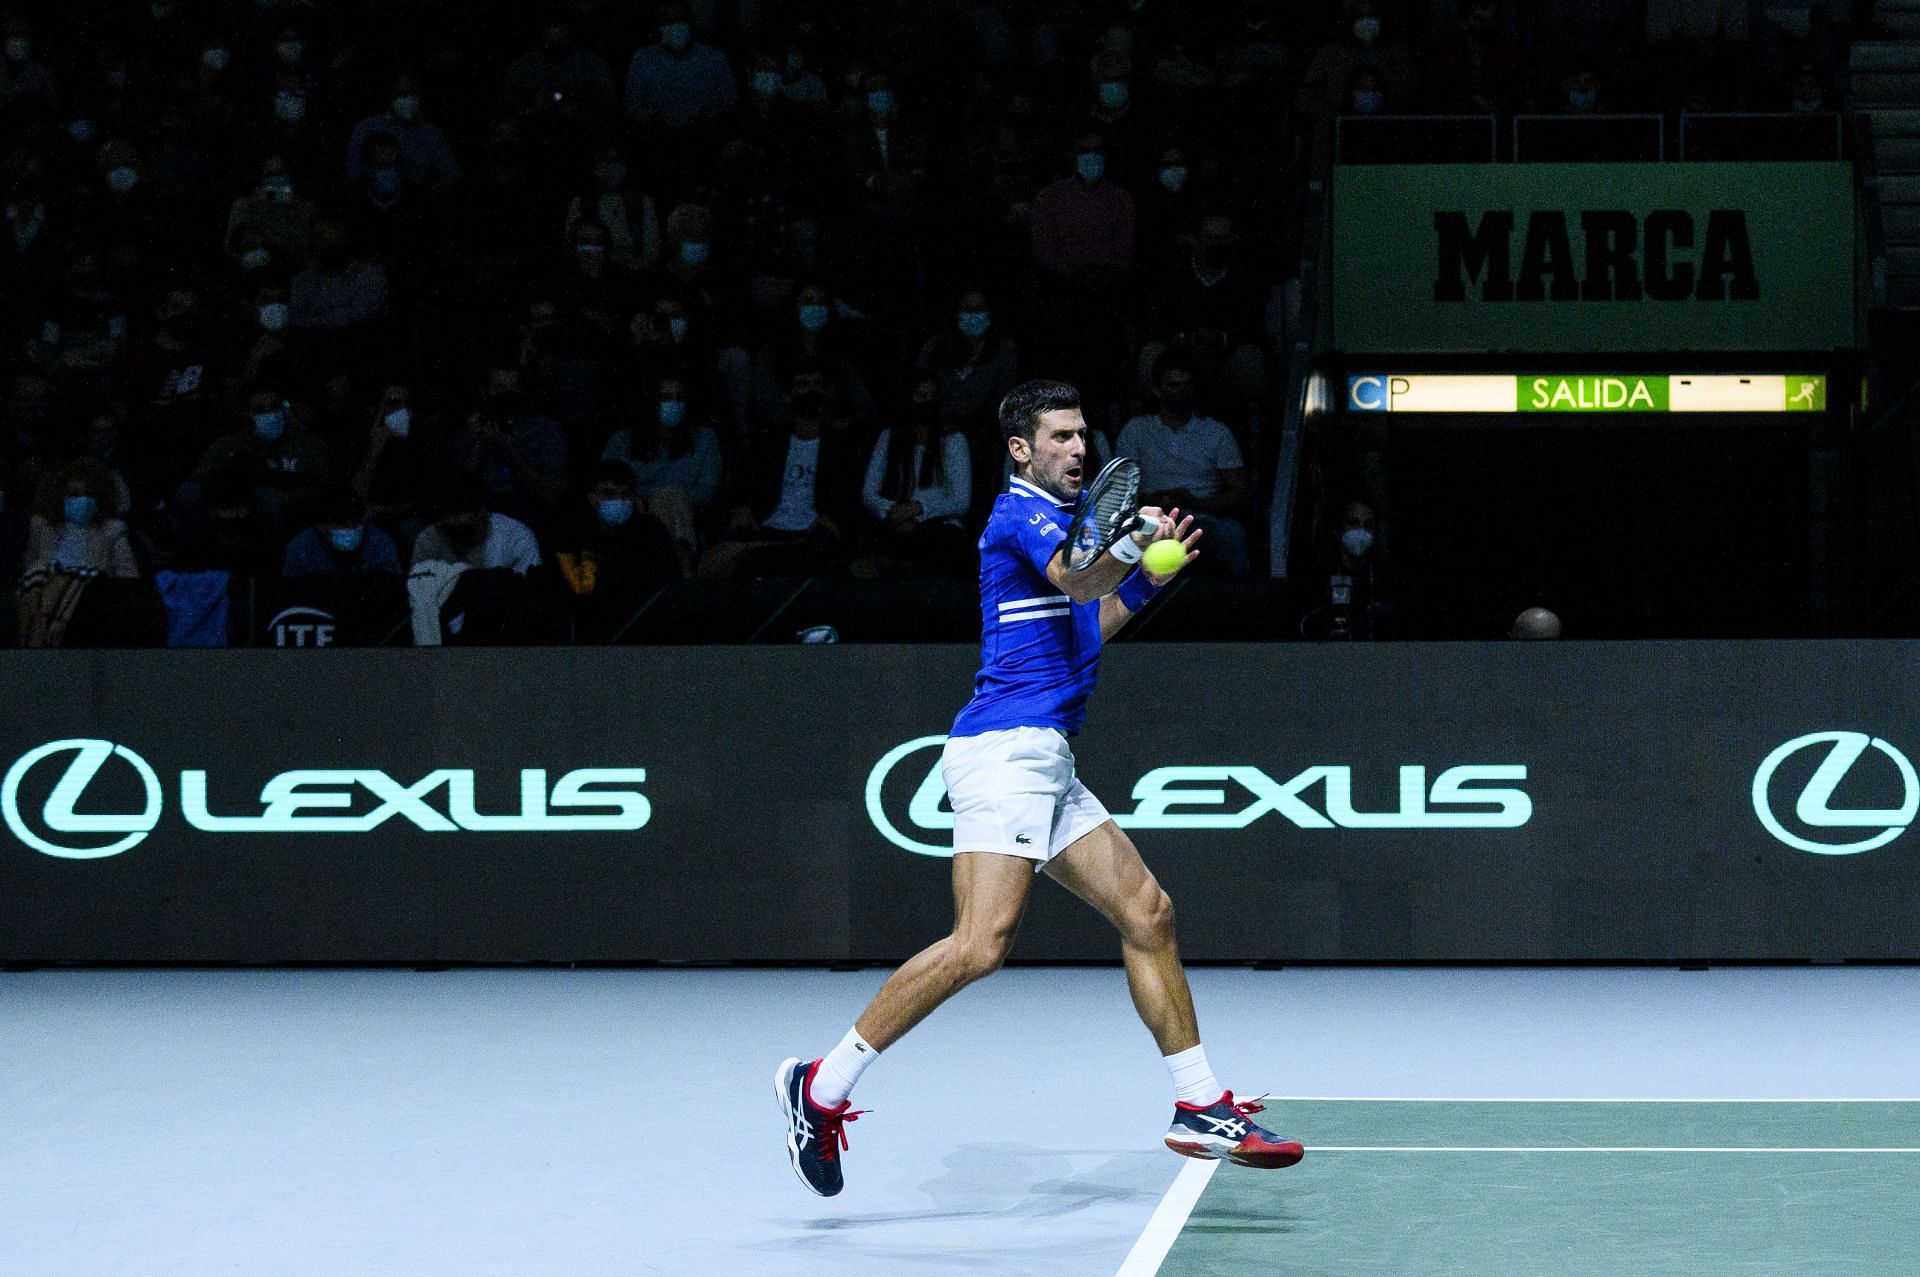 Novak Djokovic plays a forehand at the 2021 Davis Cup Finals